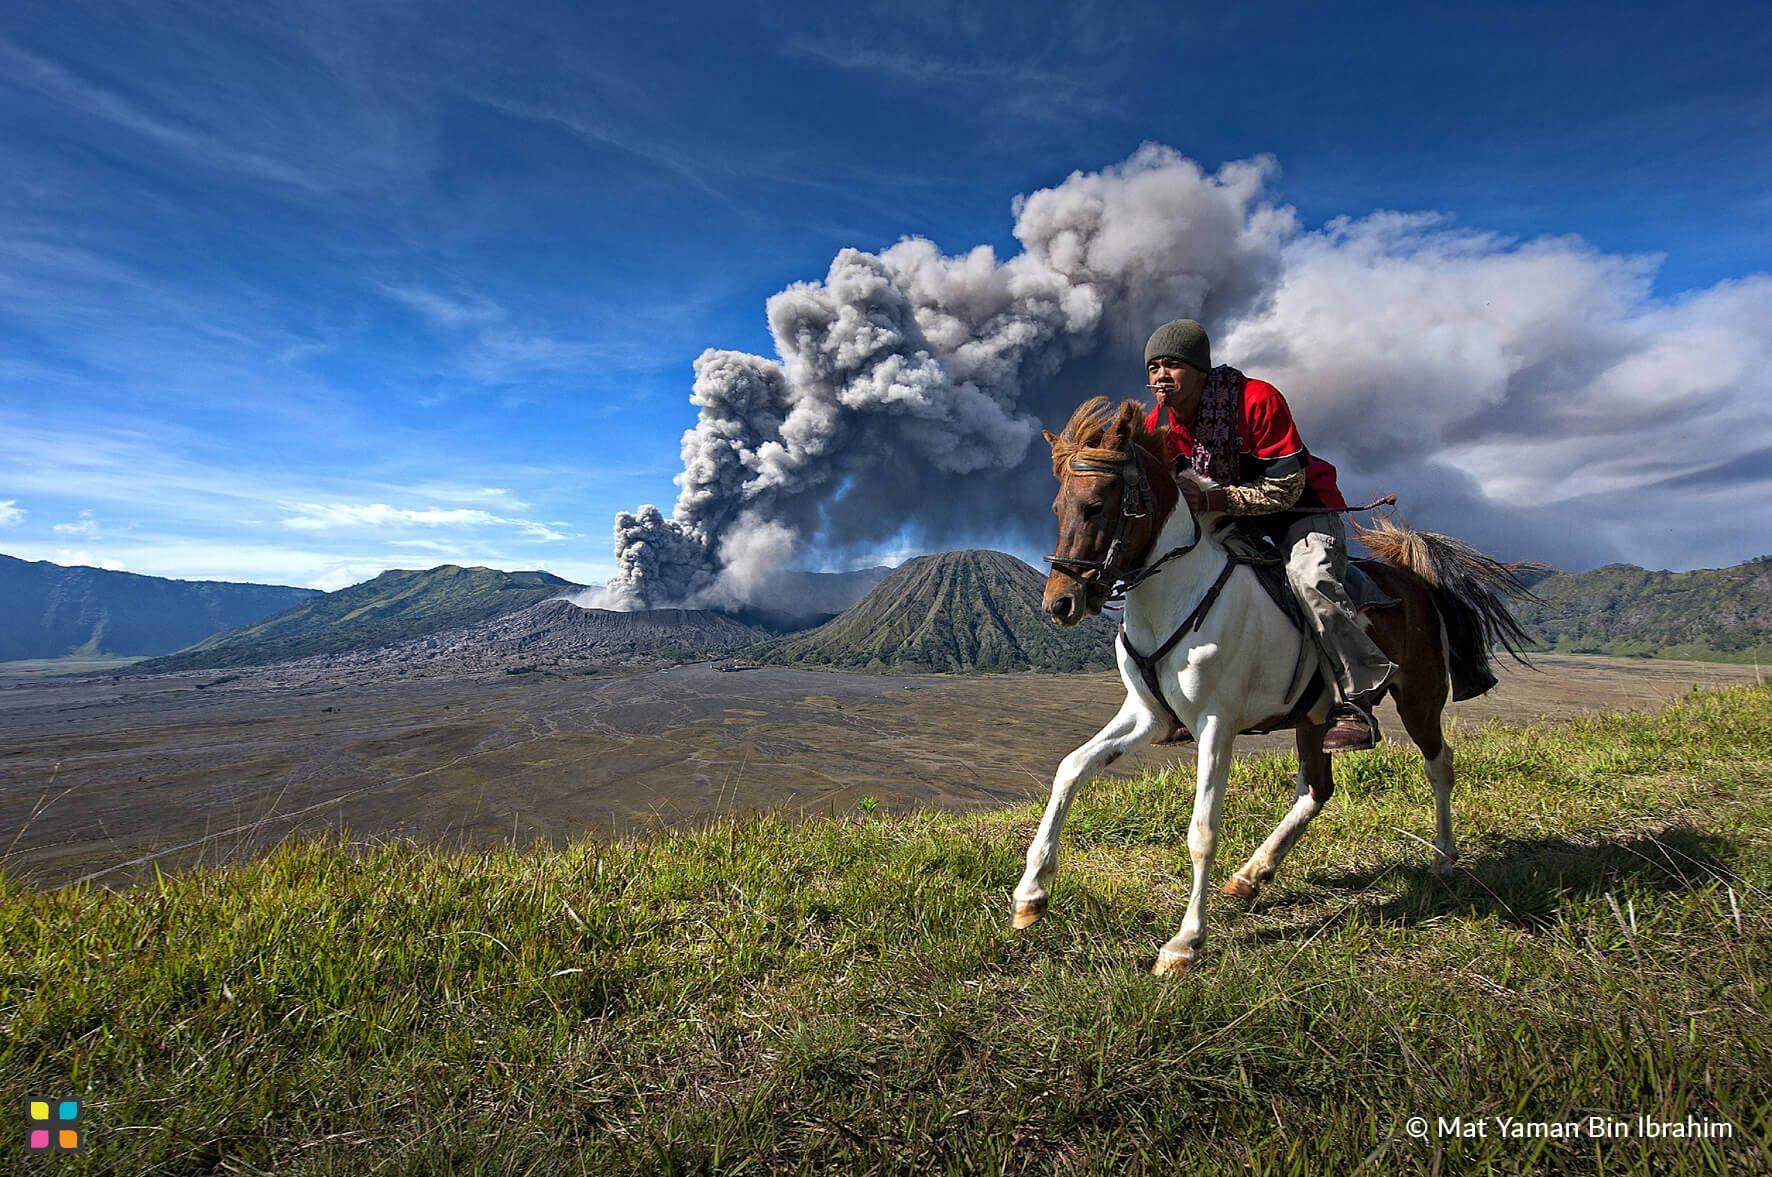 A rider on horseback races away from the smoking, active, Indonesian volcano, Mount Bromo.
Photographer: Matt Yaman Bin Ibrahim  Location: East Java, Indonesia